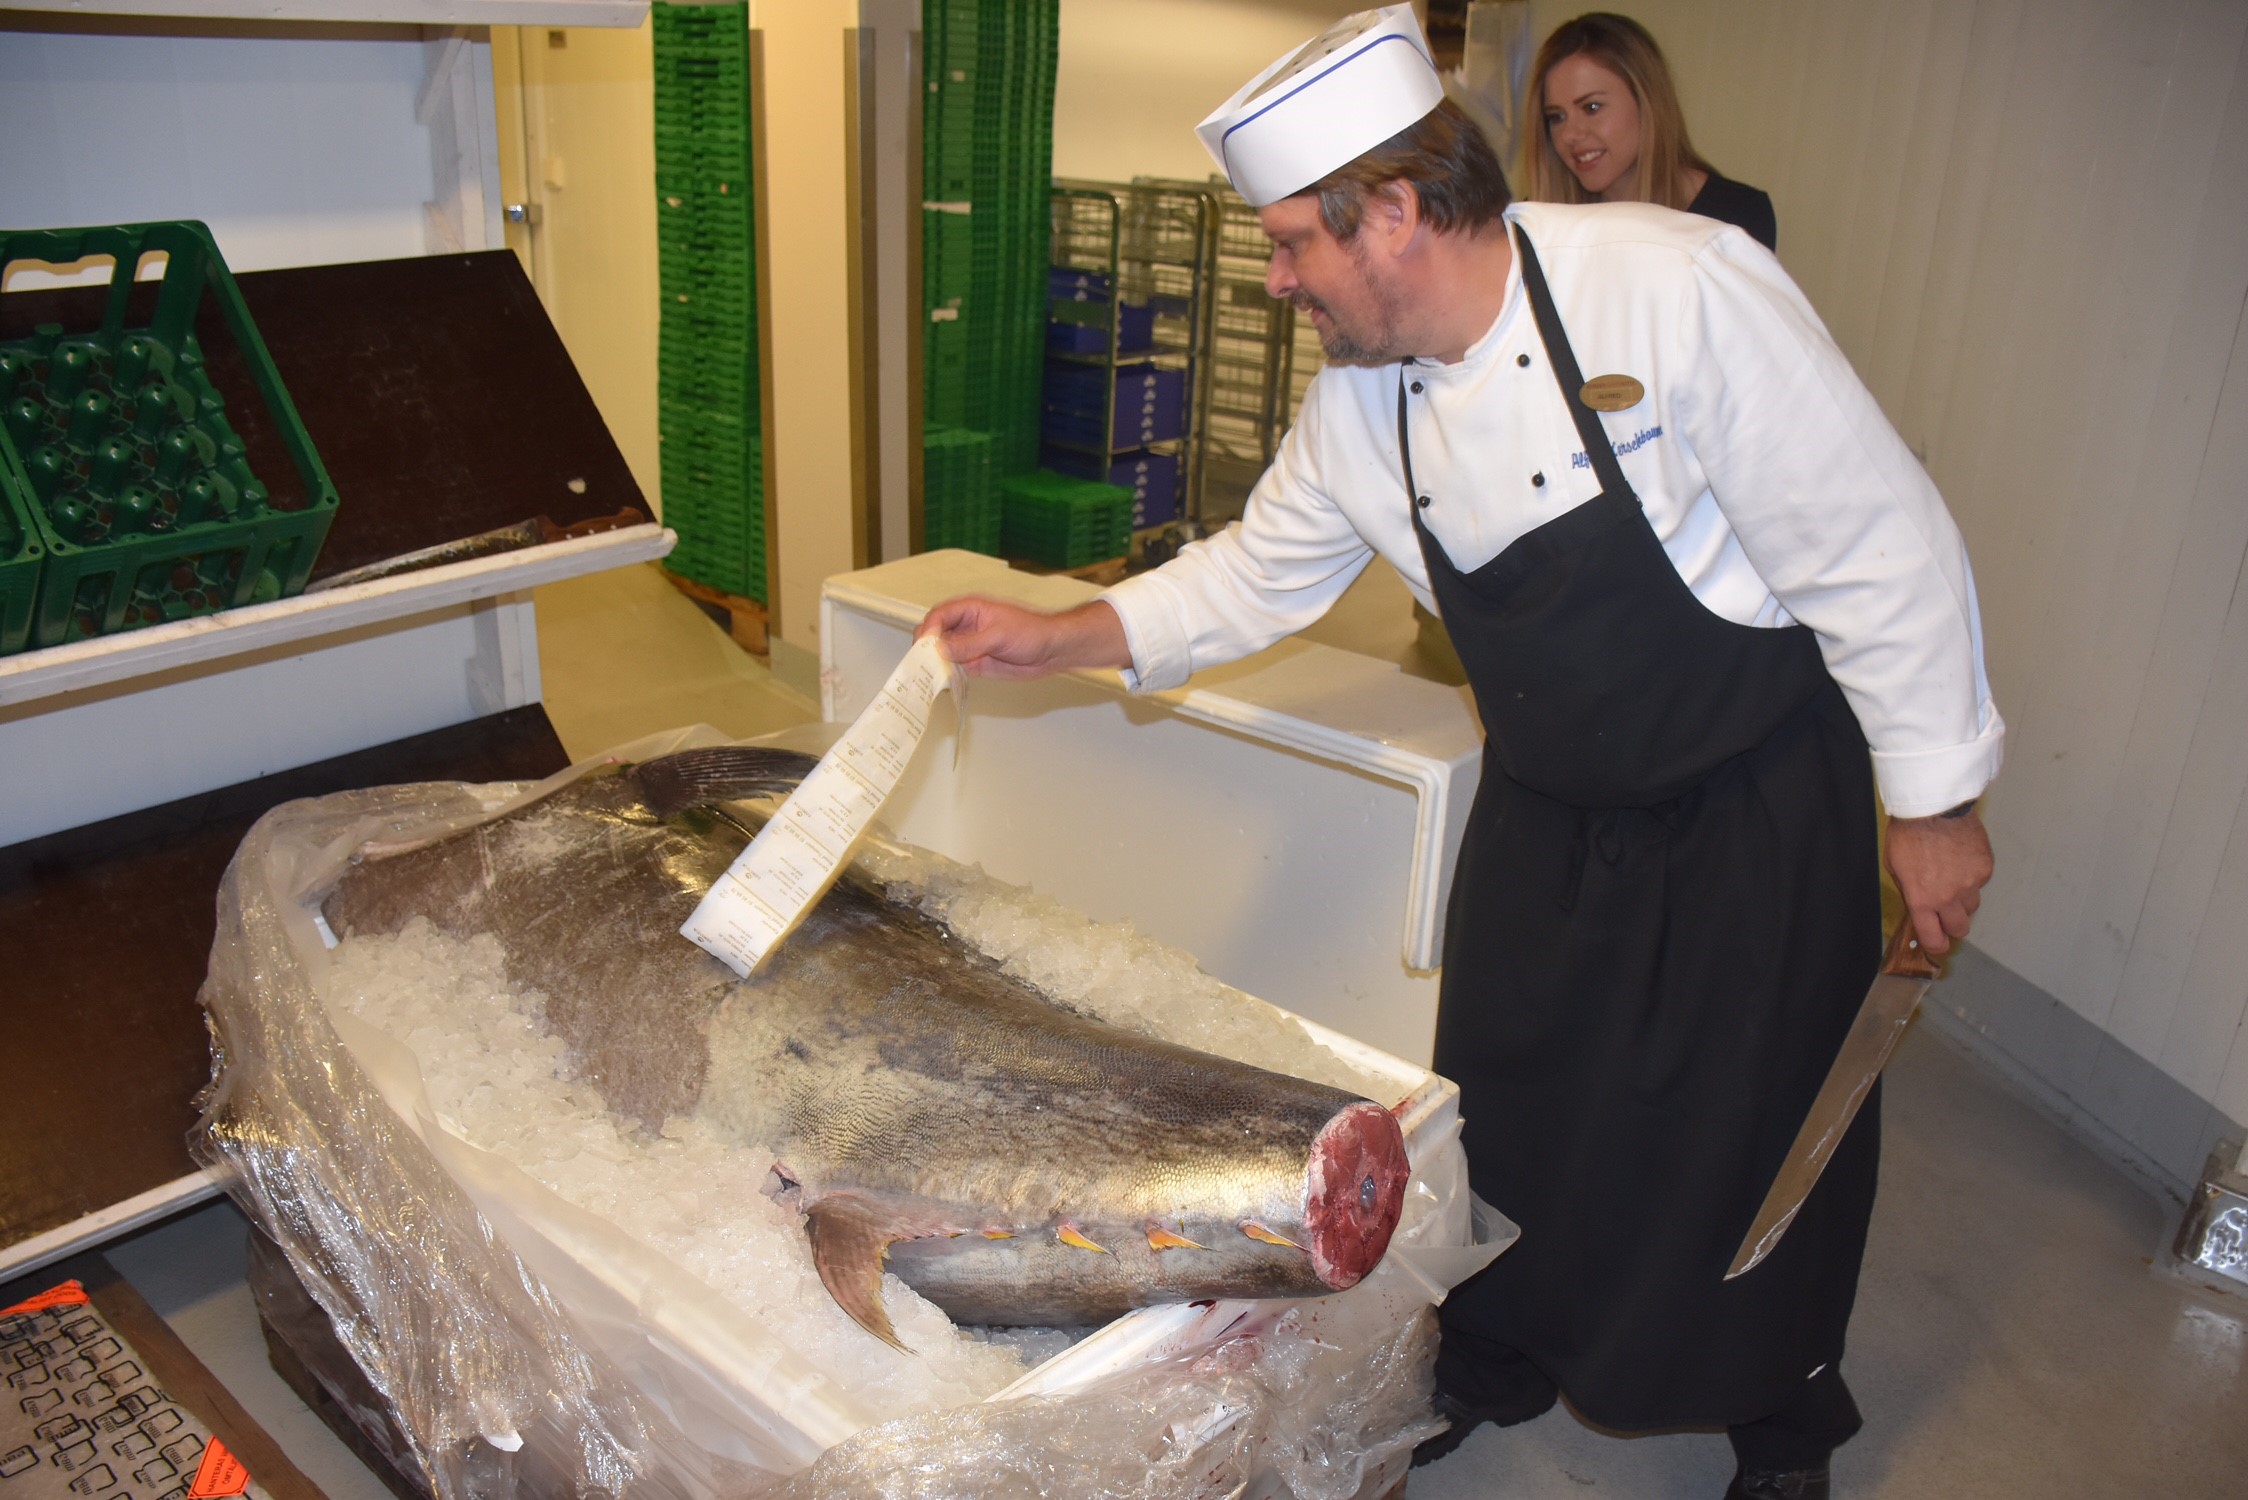 The mackerel sturgeon has provided taste experiences beyond expectations